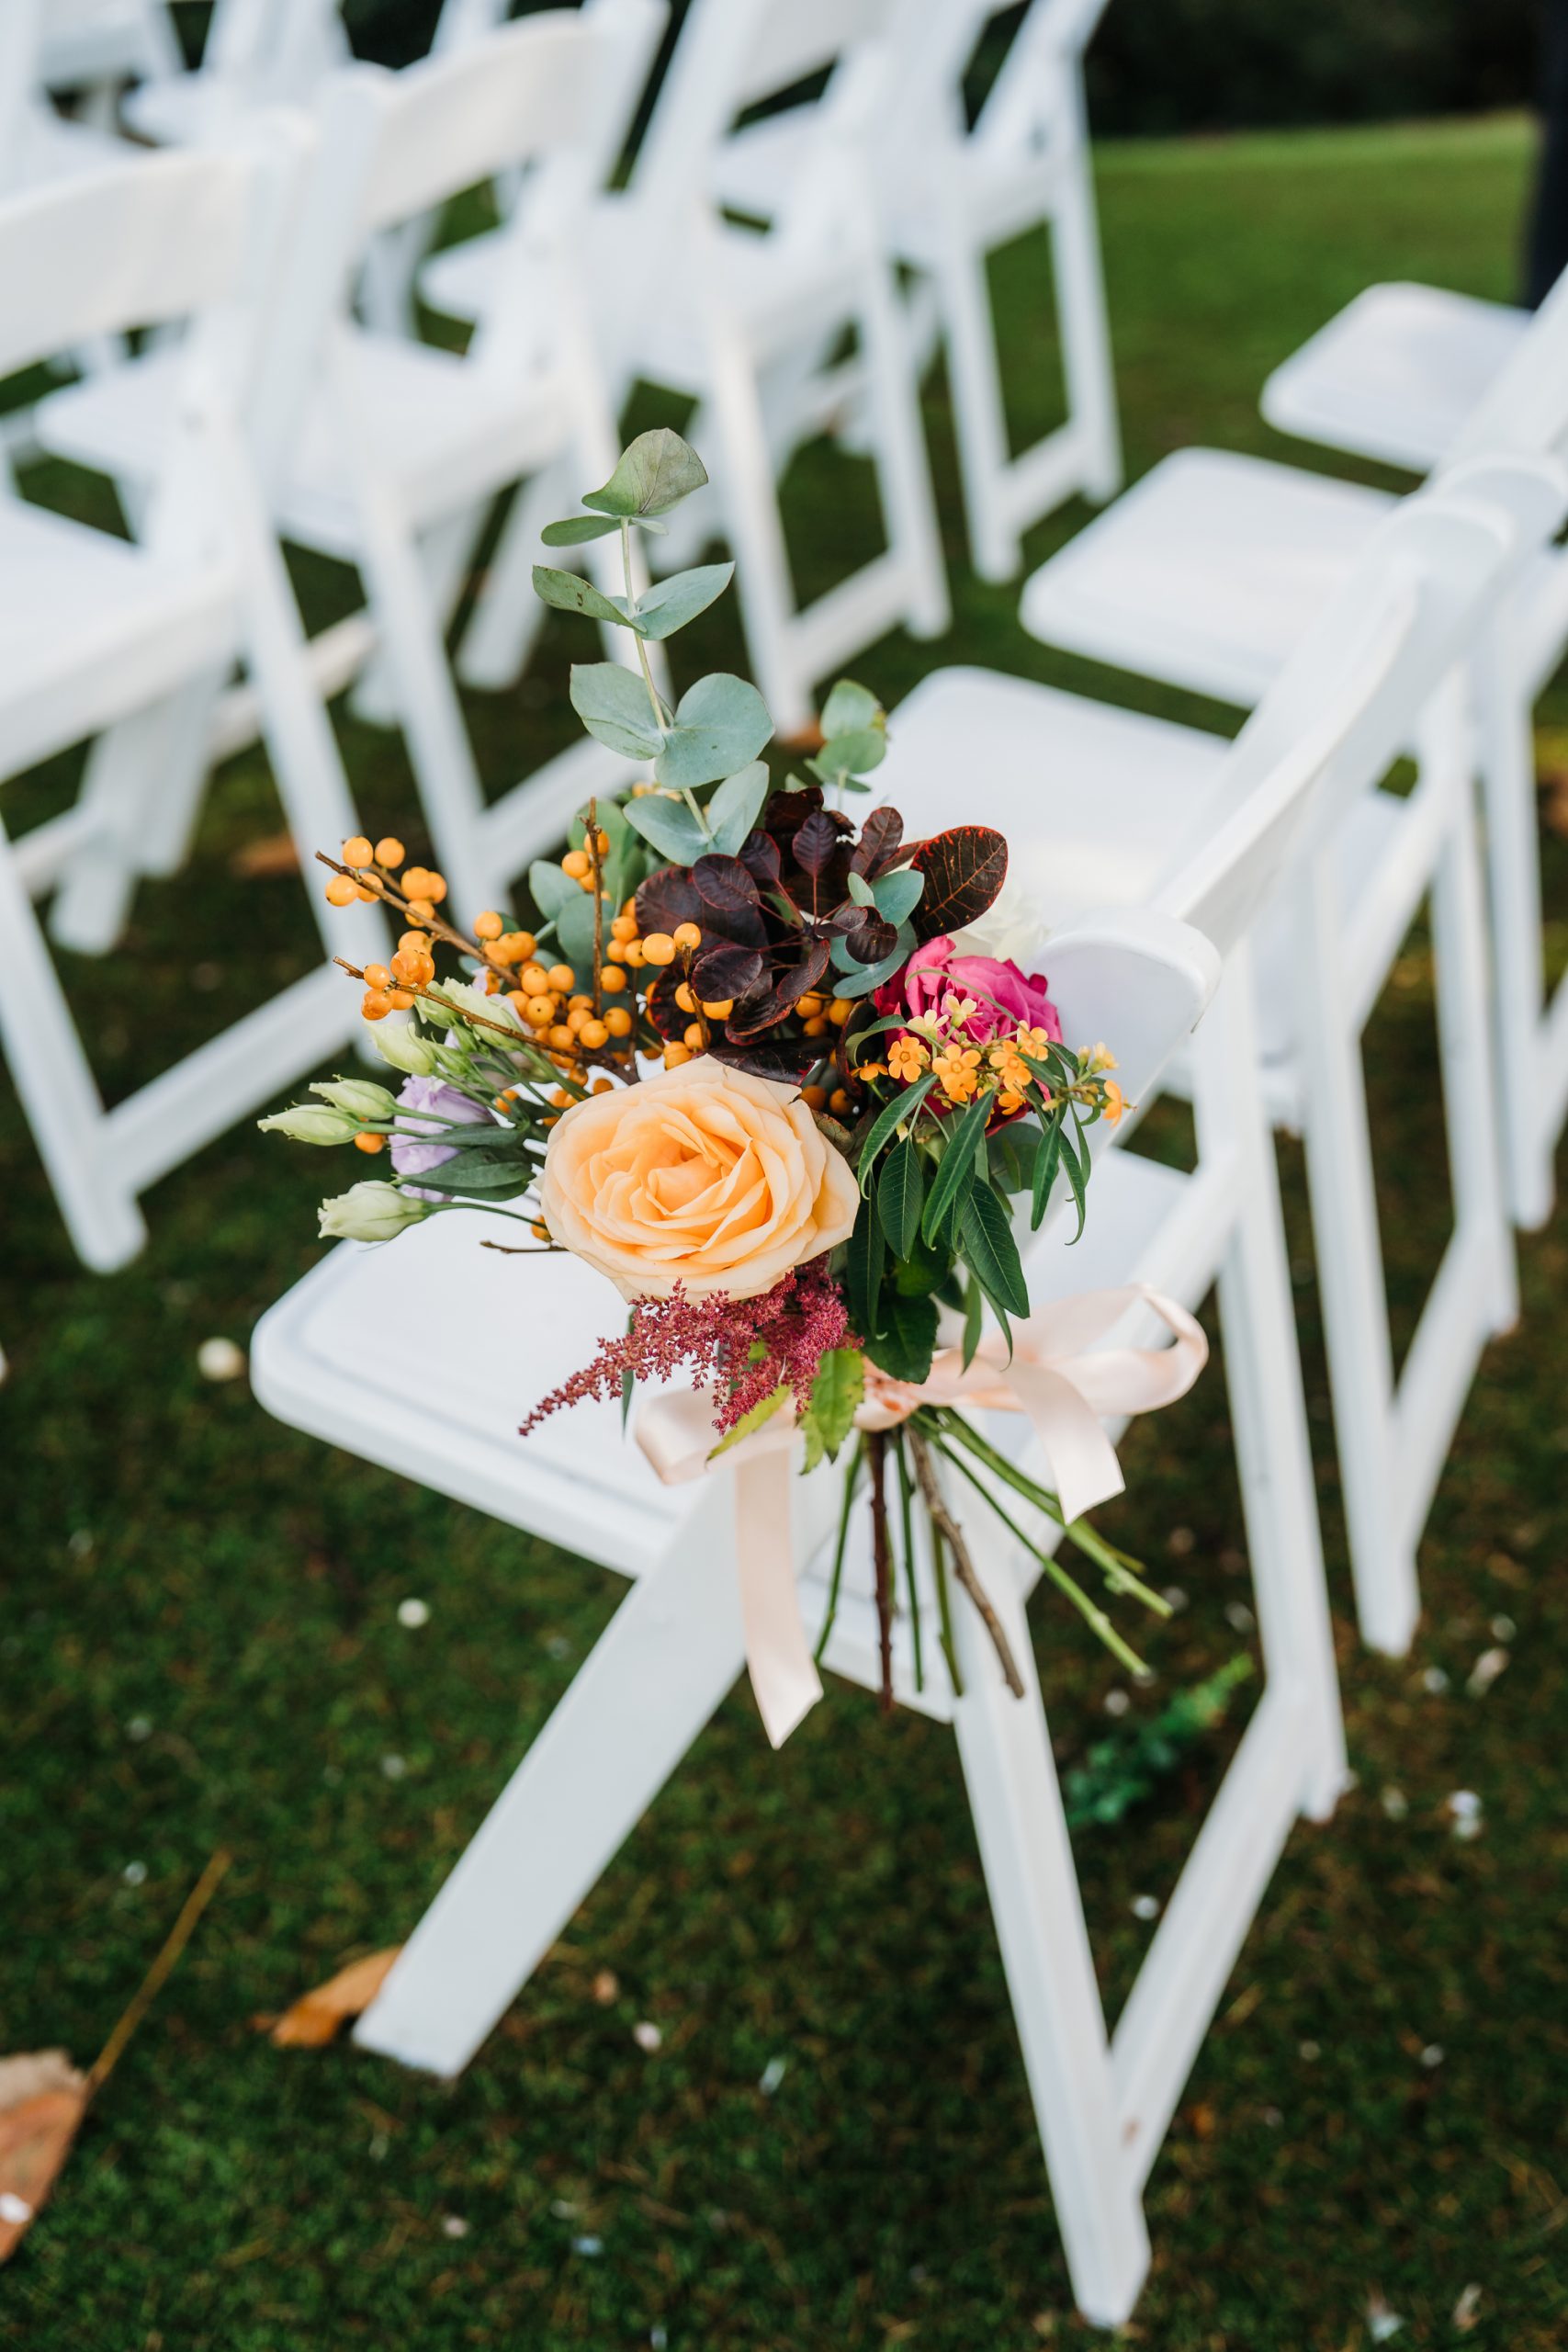 Outdoor ceremony wedding flower ideas